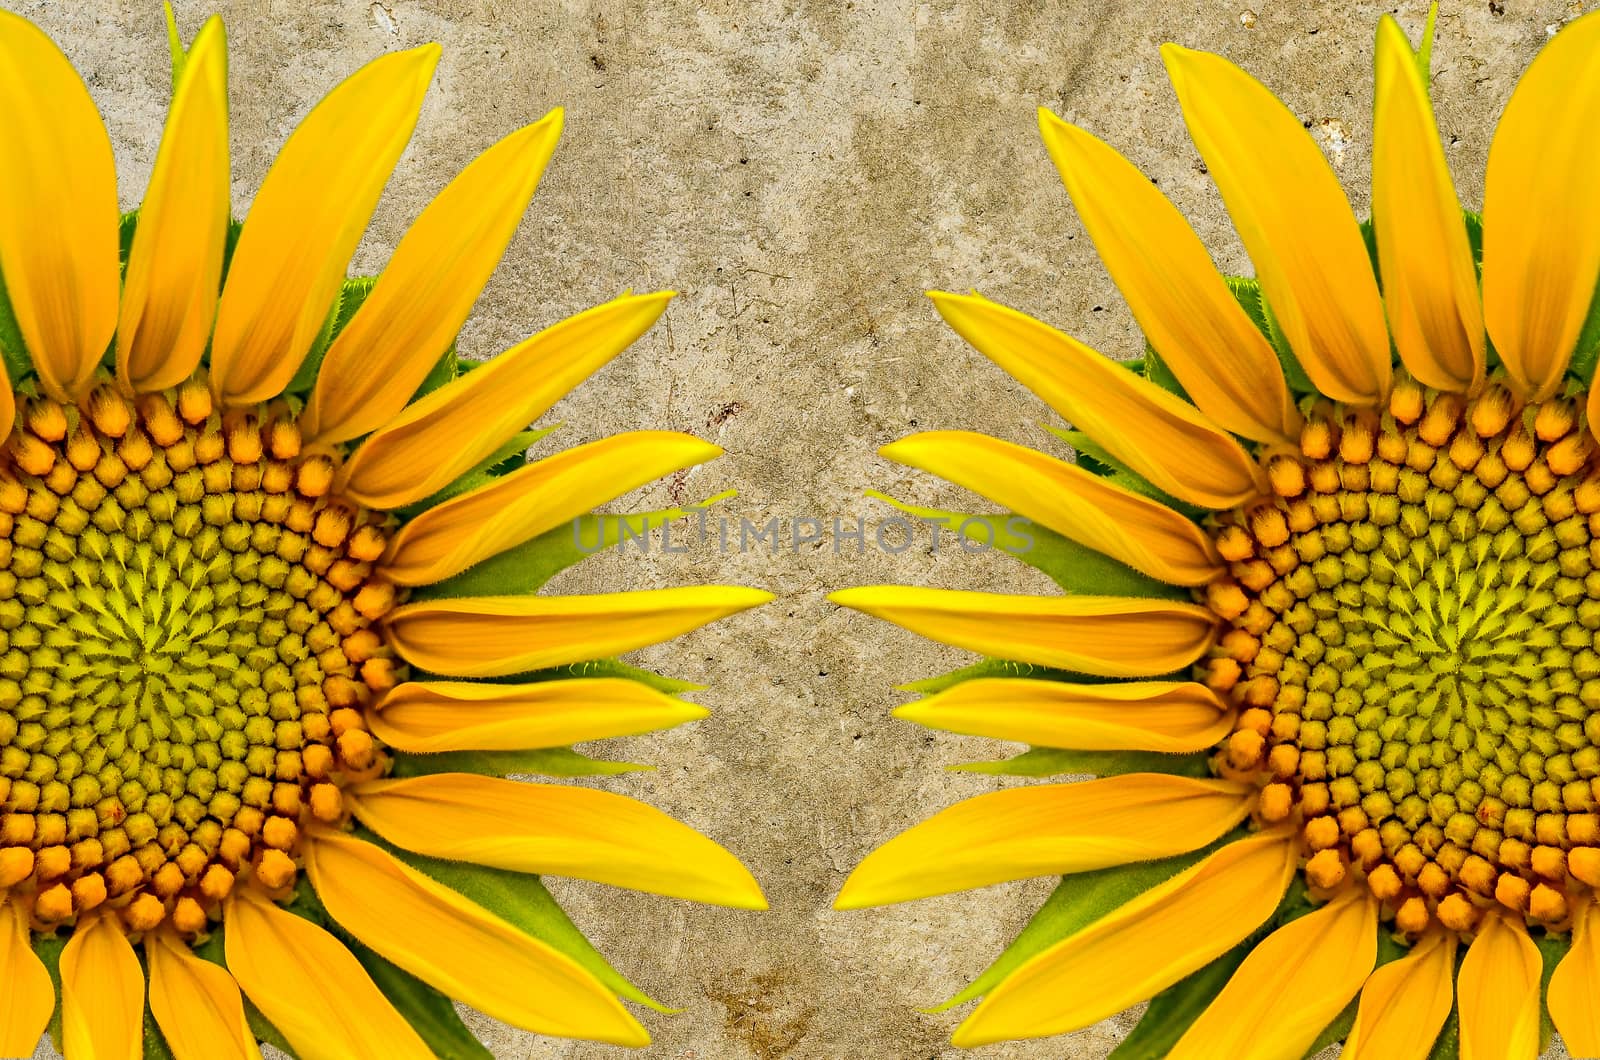 sunflower closeup by raweenuttapong